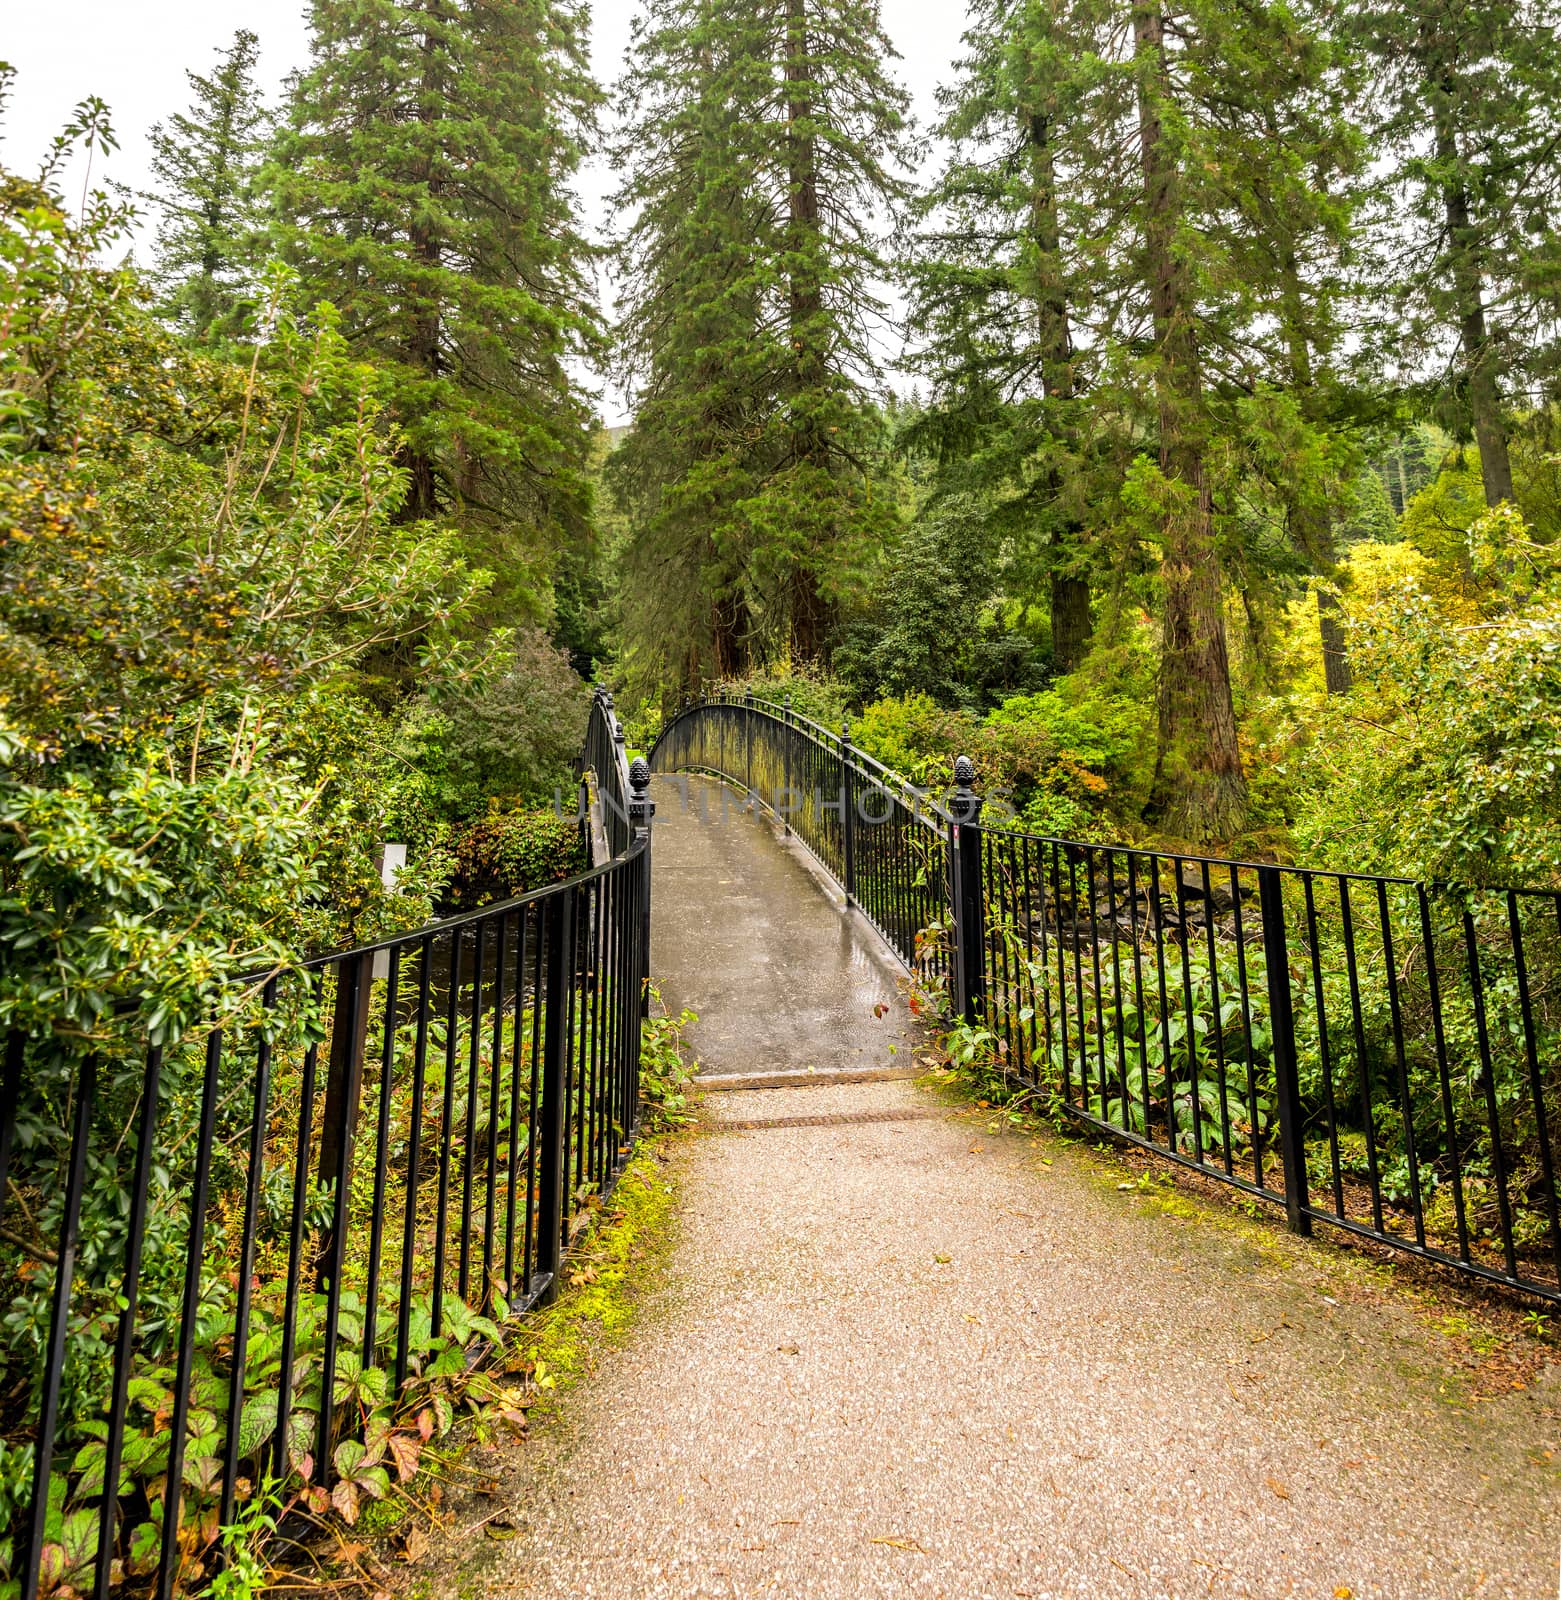 An entry visitor's bridge to Benmore Botanic Garden over river Eachaig, Loch Lomond and the Trossachs National Park, Scotland